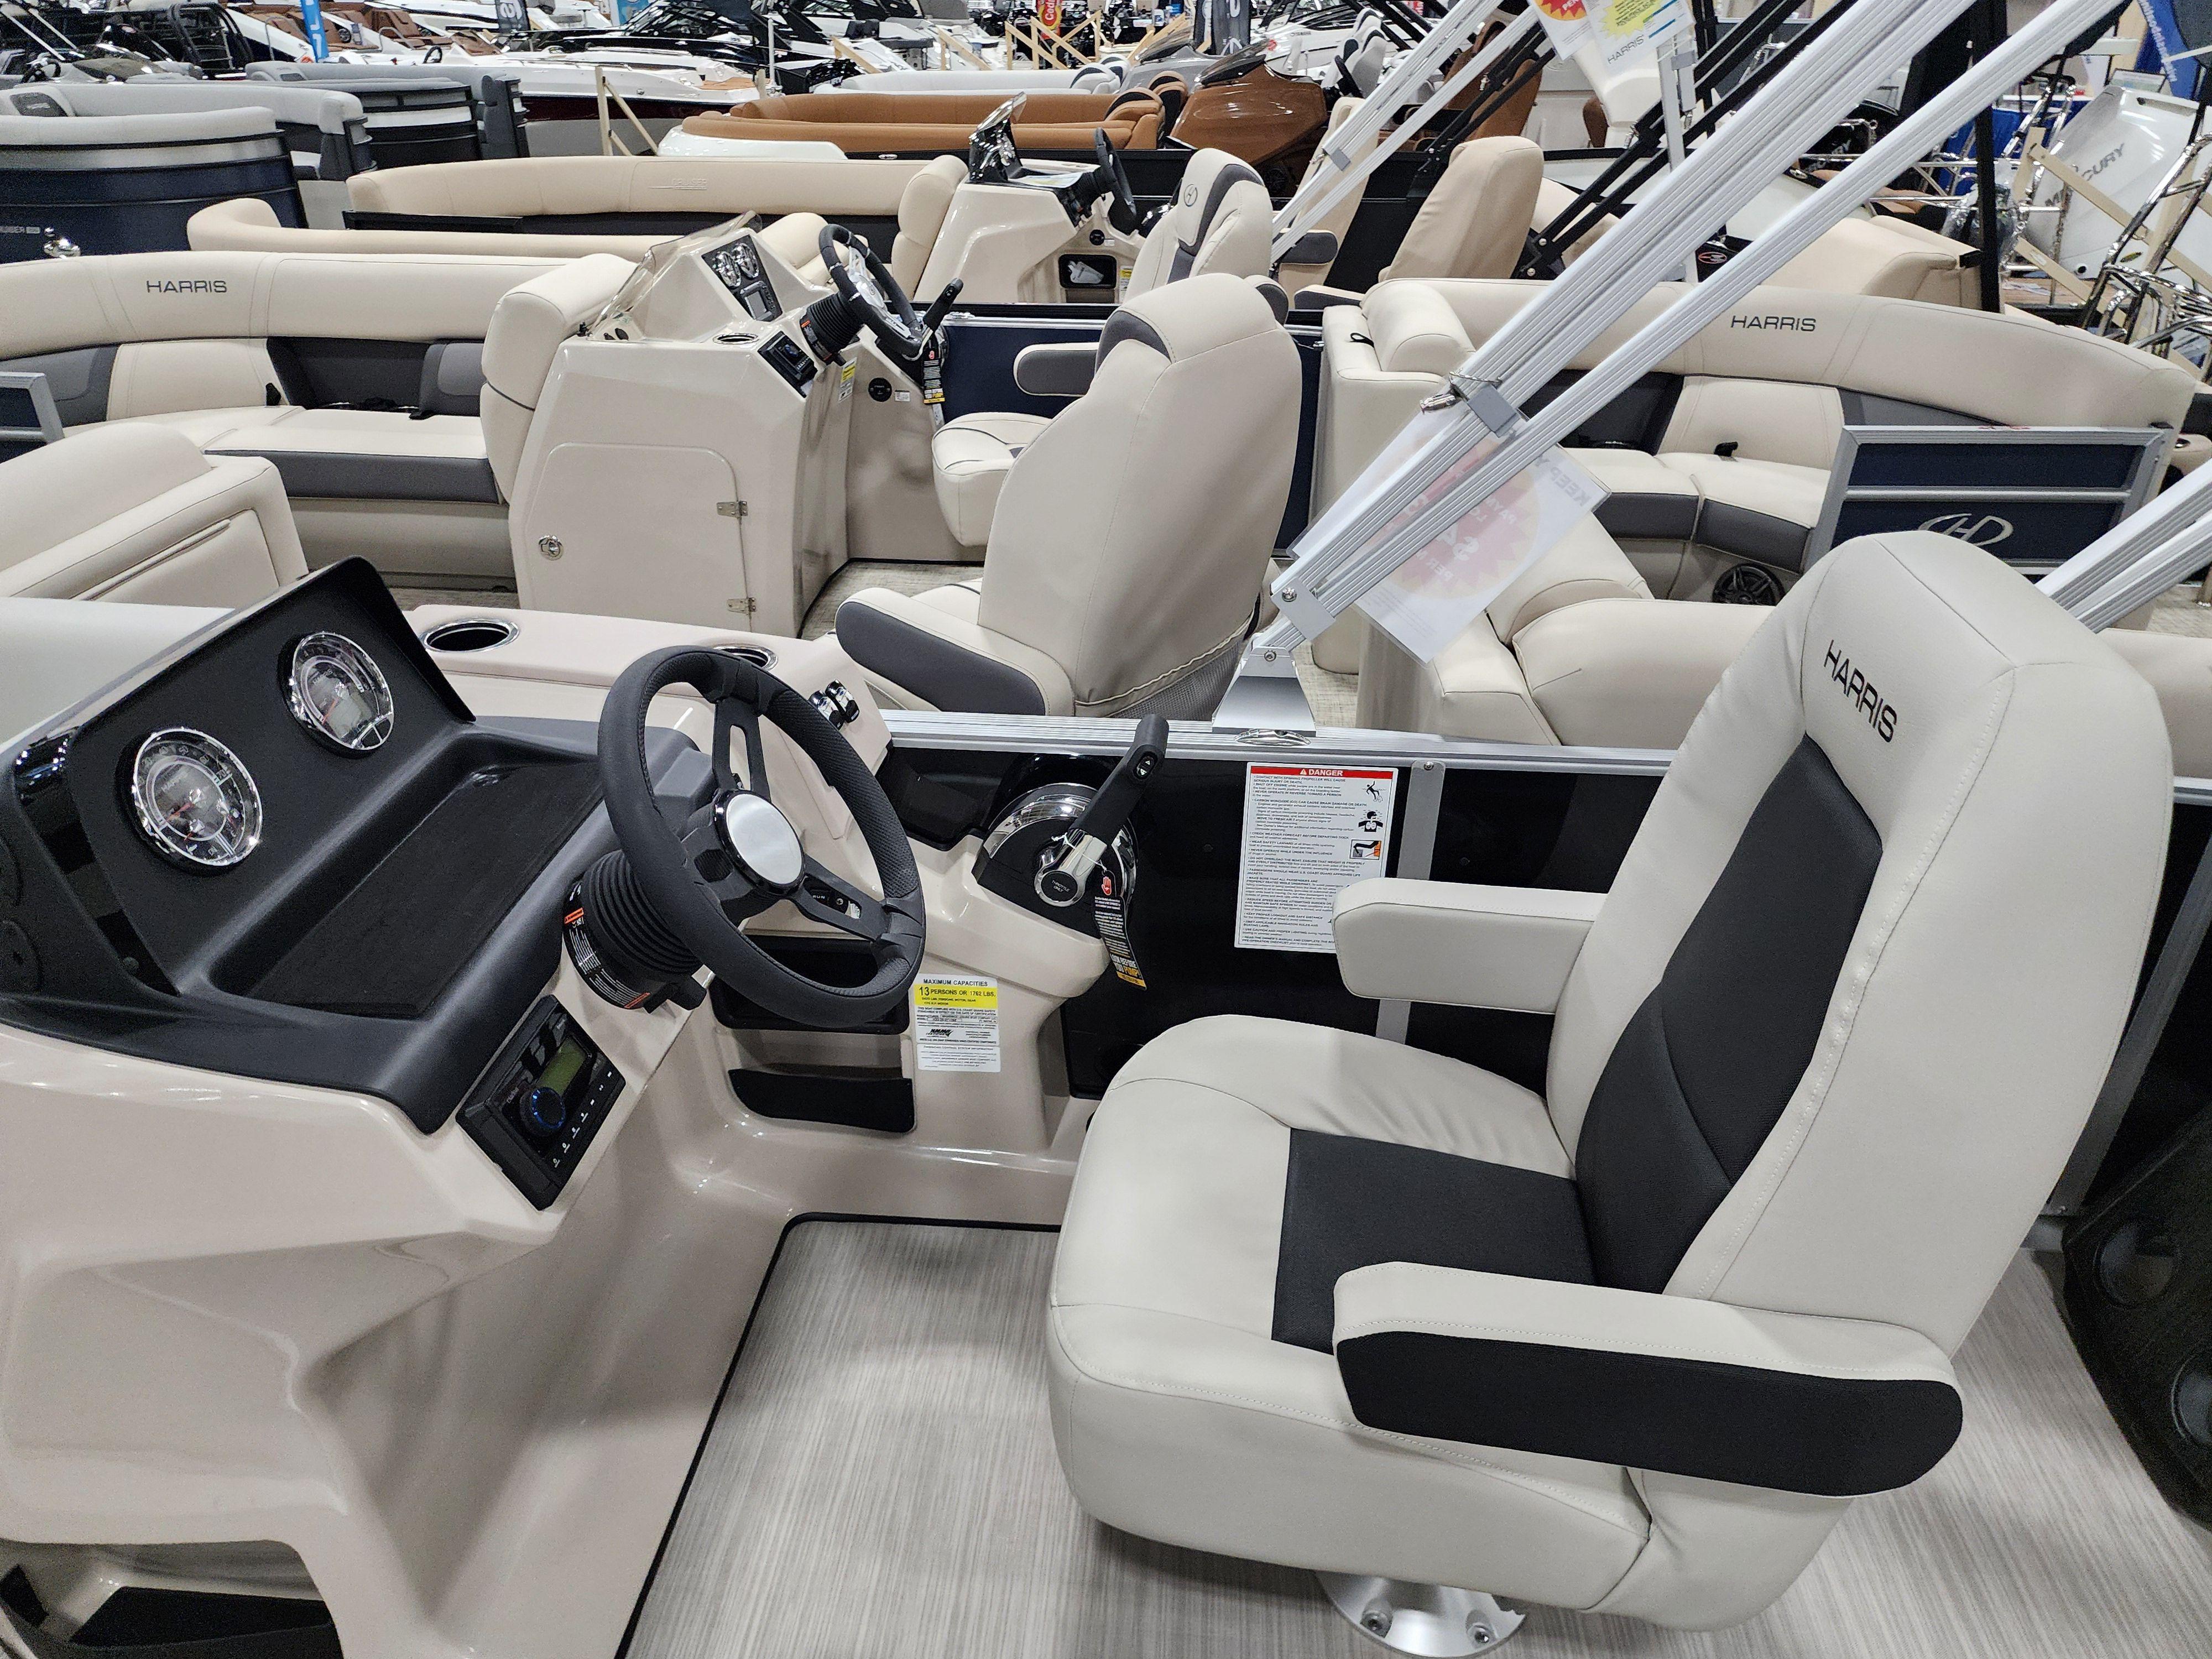 2024 Harris 210 Breeze CW Floorplan Pontoon for sale - YachtWorld